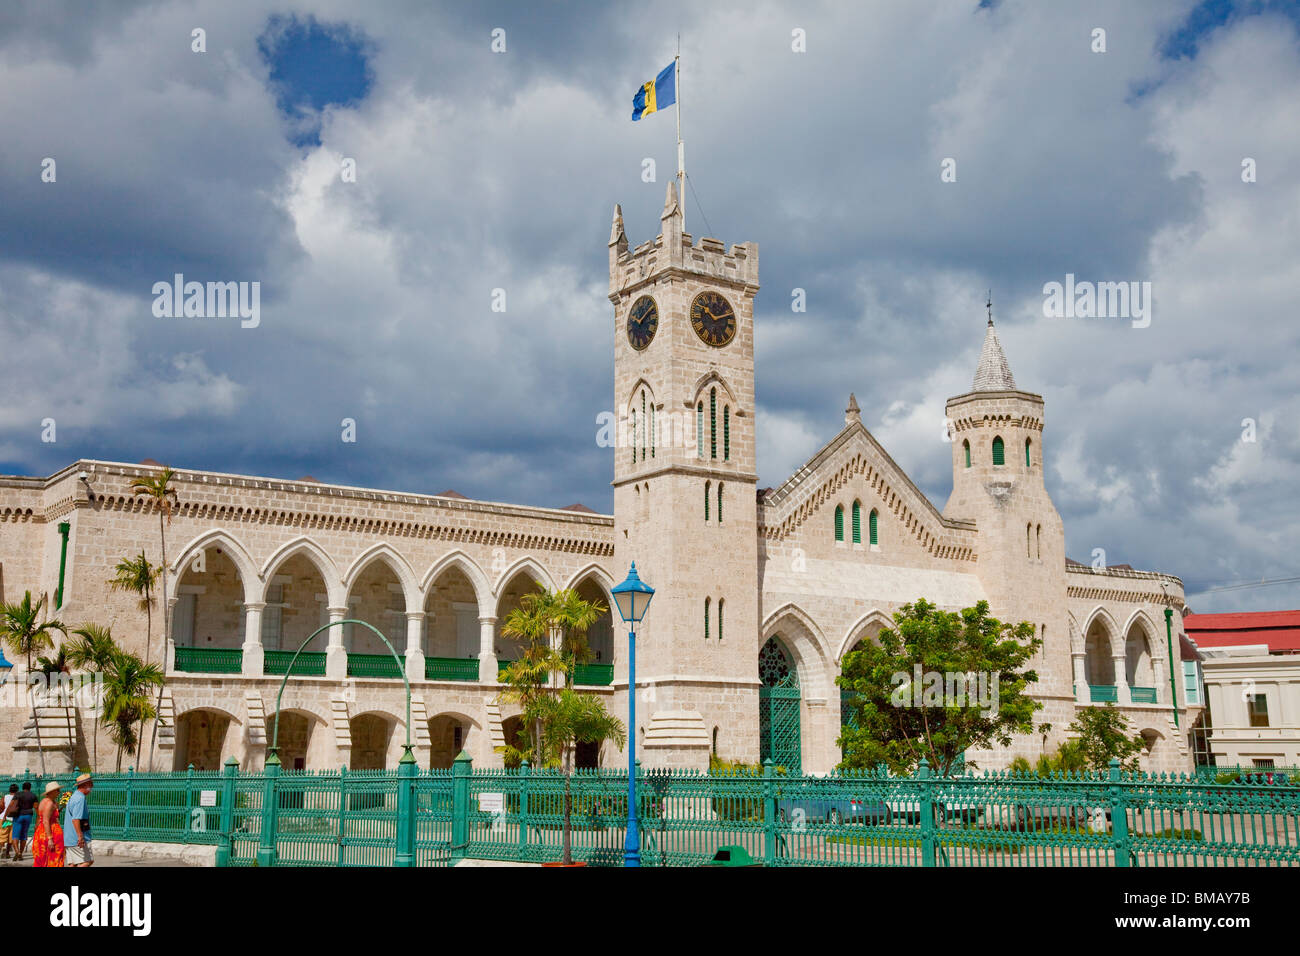 The parliament buildings in Bridgetown, Barbados, West Indies. Stock Photo